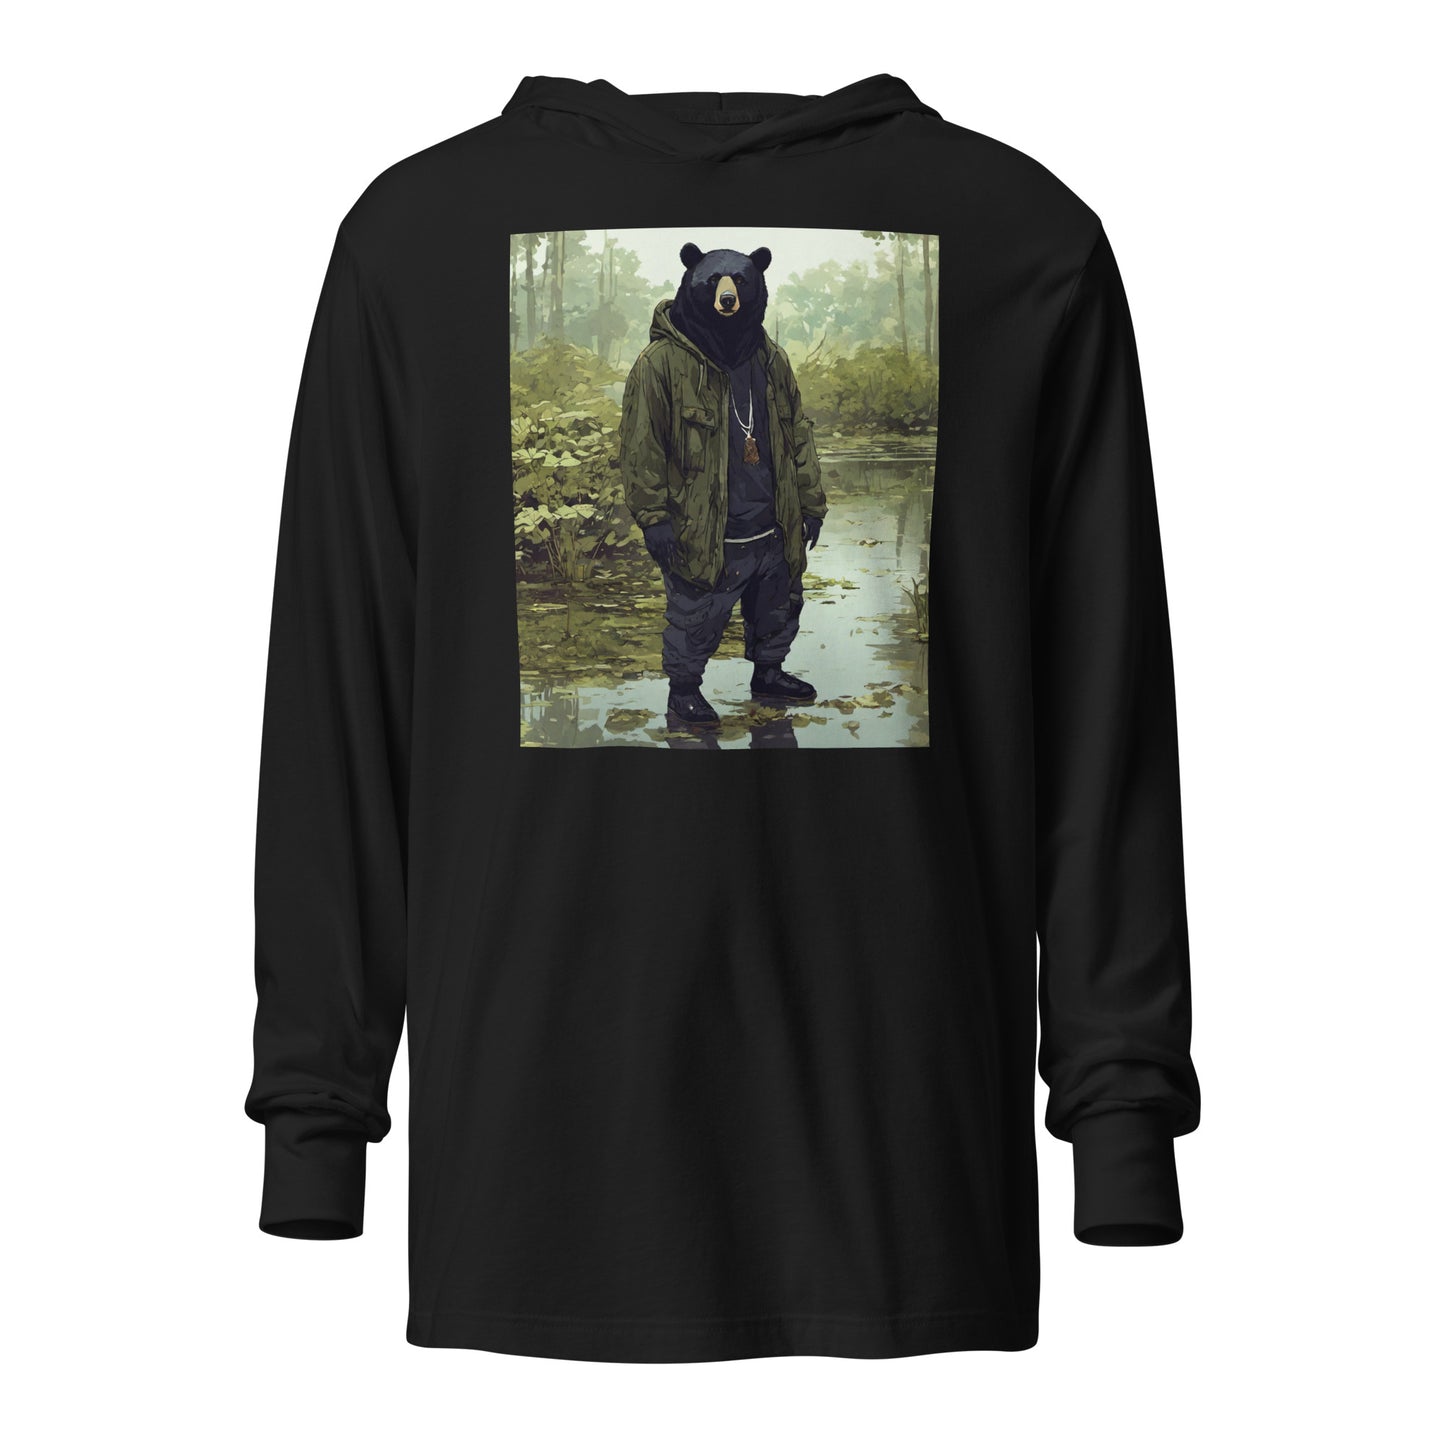 Stoic Black Bear Hooded Long-Sleeve Tee Black